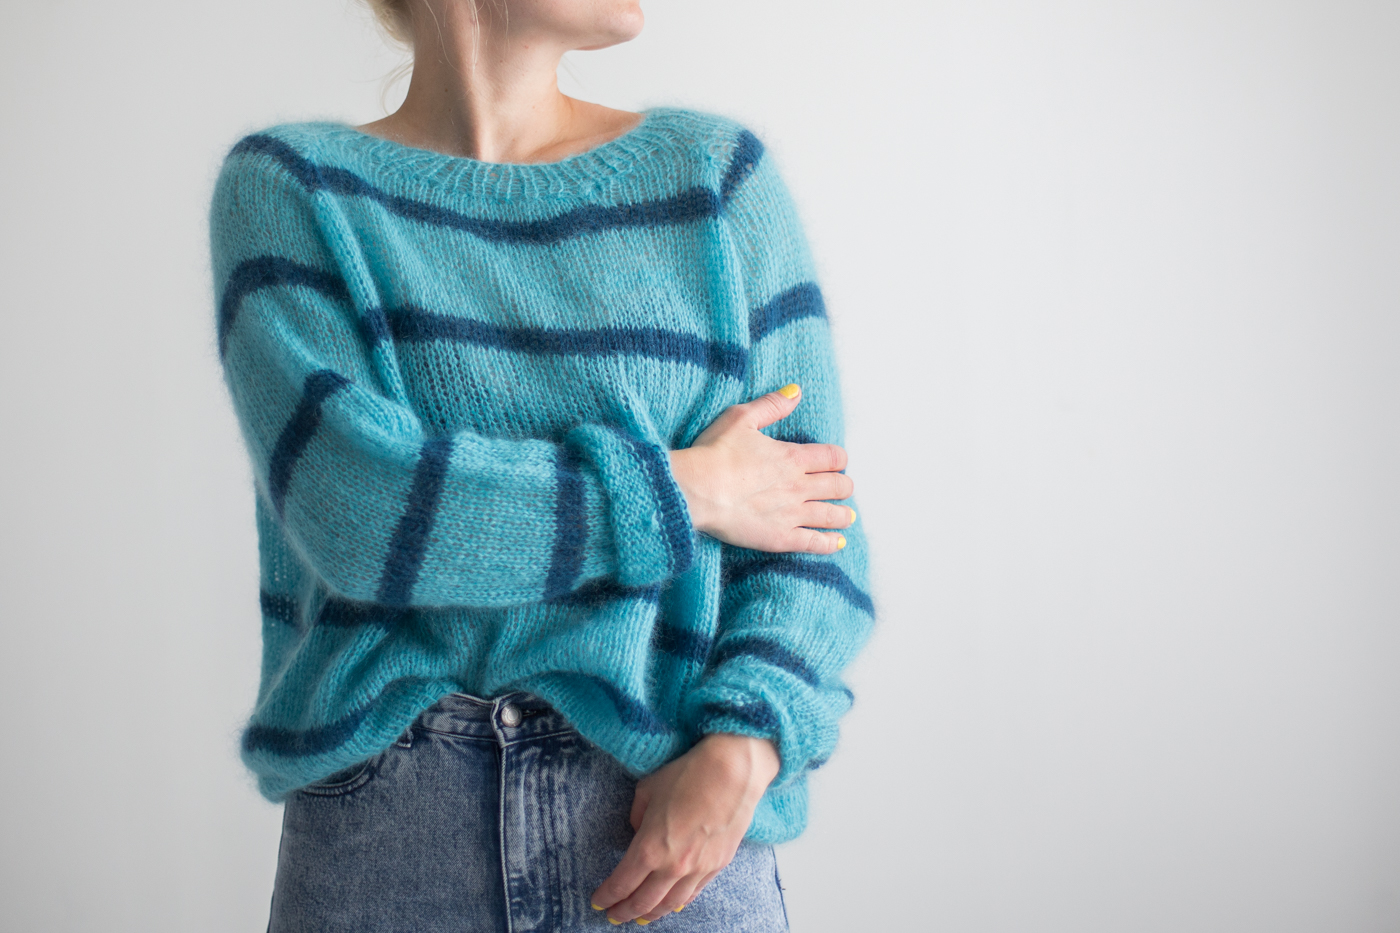 mohair sweater knitting pattern - Heysailor! | Striped mohair sweater knittingpattern - by HipKnitShop - 26/06/2018